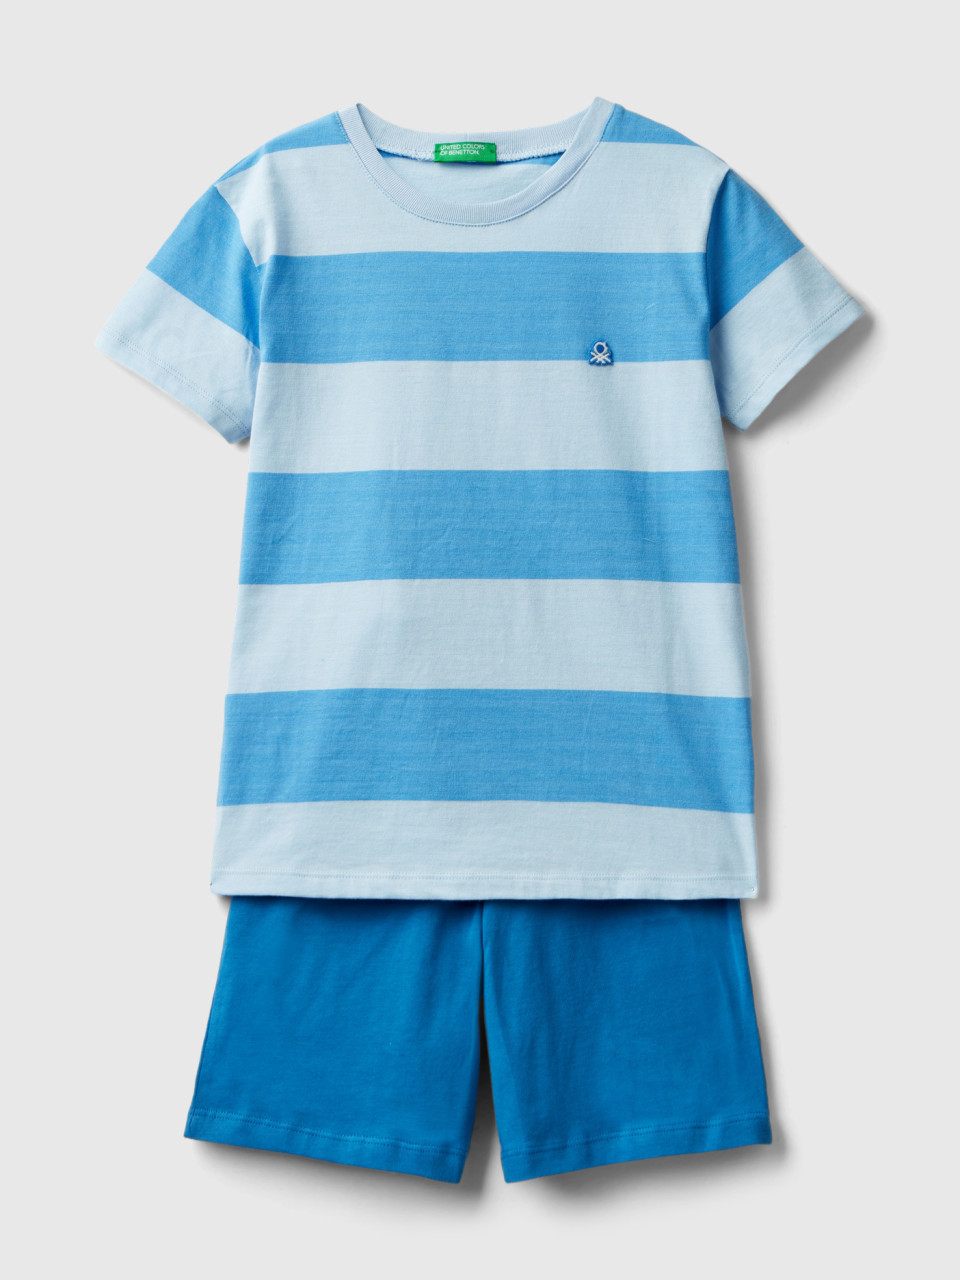 Benetton, Pijama Con Camiseta De Rayas, Azul Claro, Niños